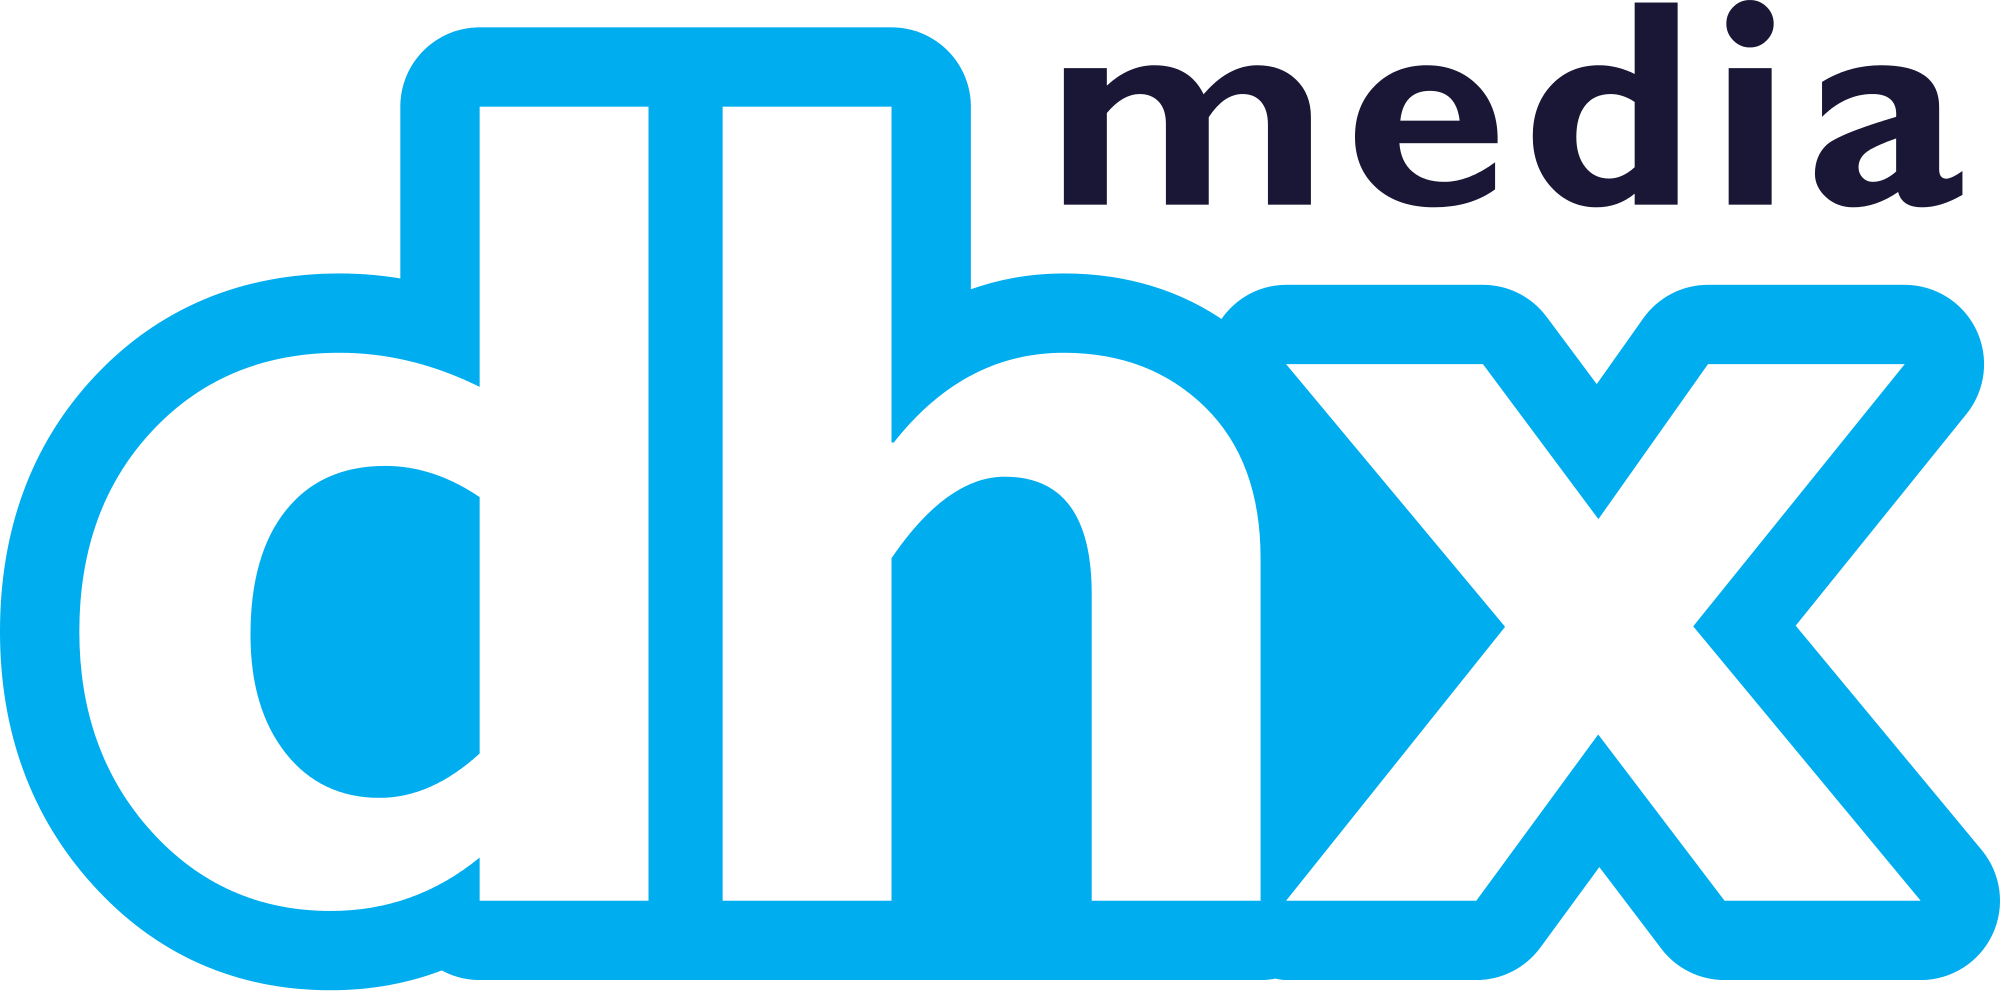 Cookie Jar Entertainment Logo - DHX Media